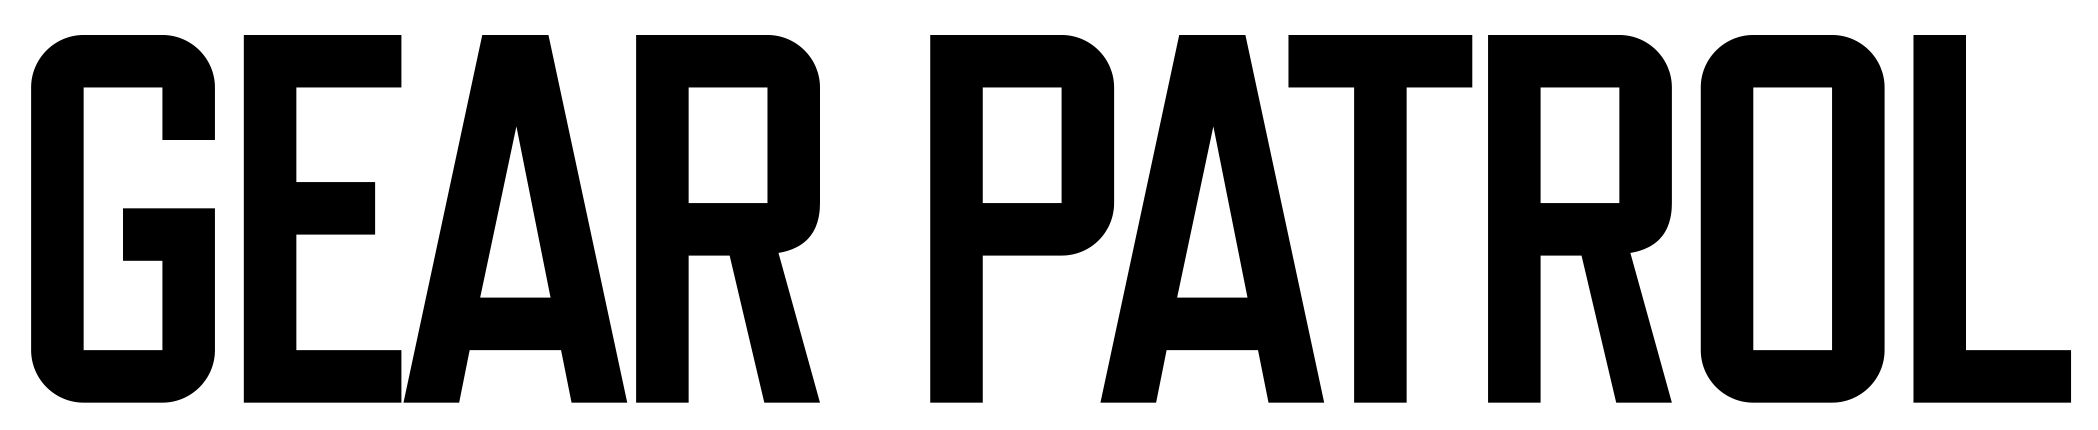 gp-masthead-logo.png